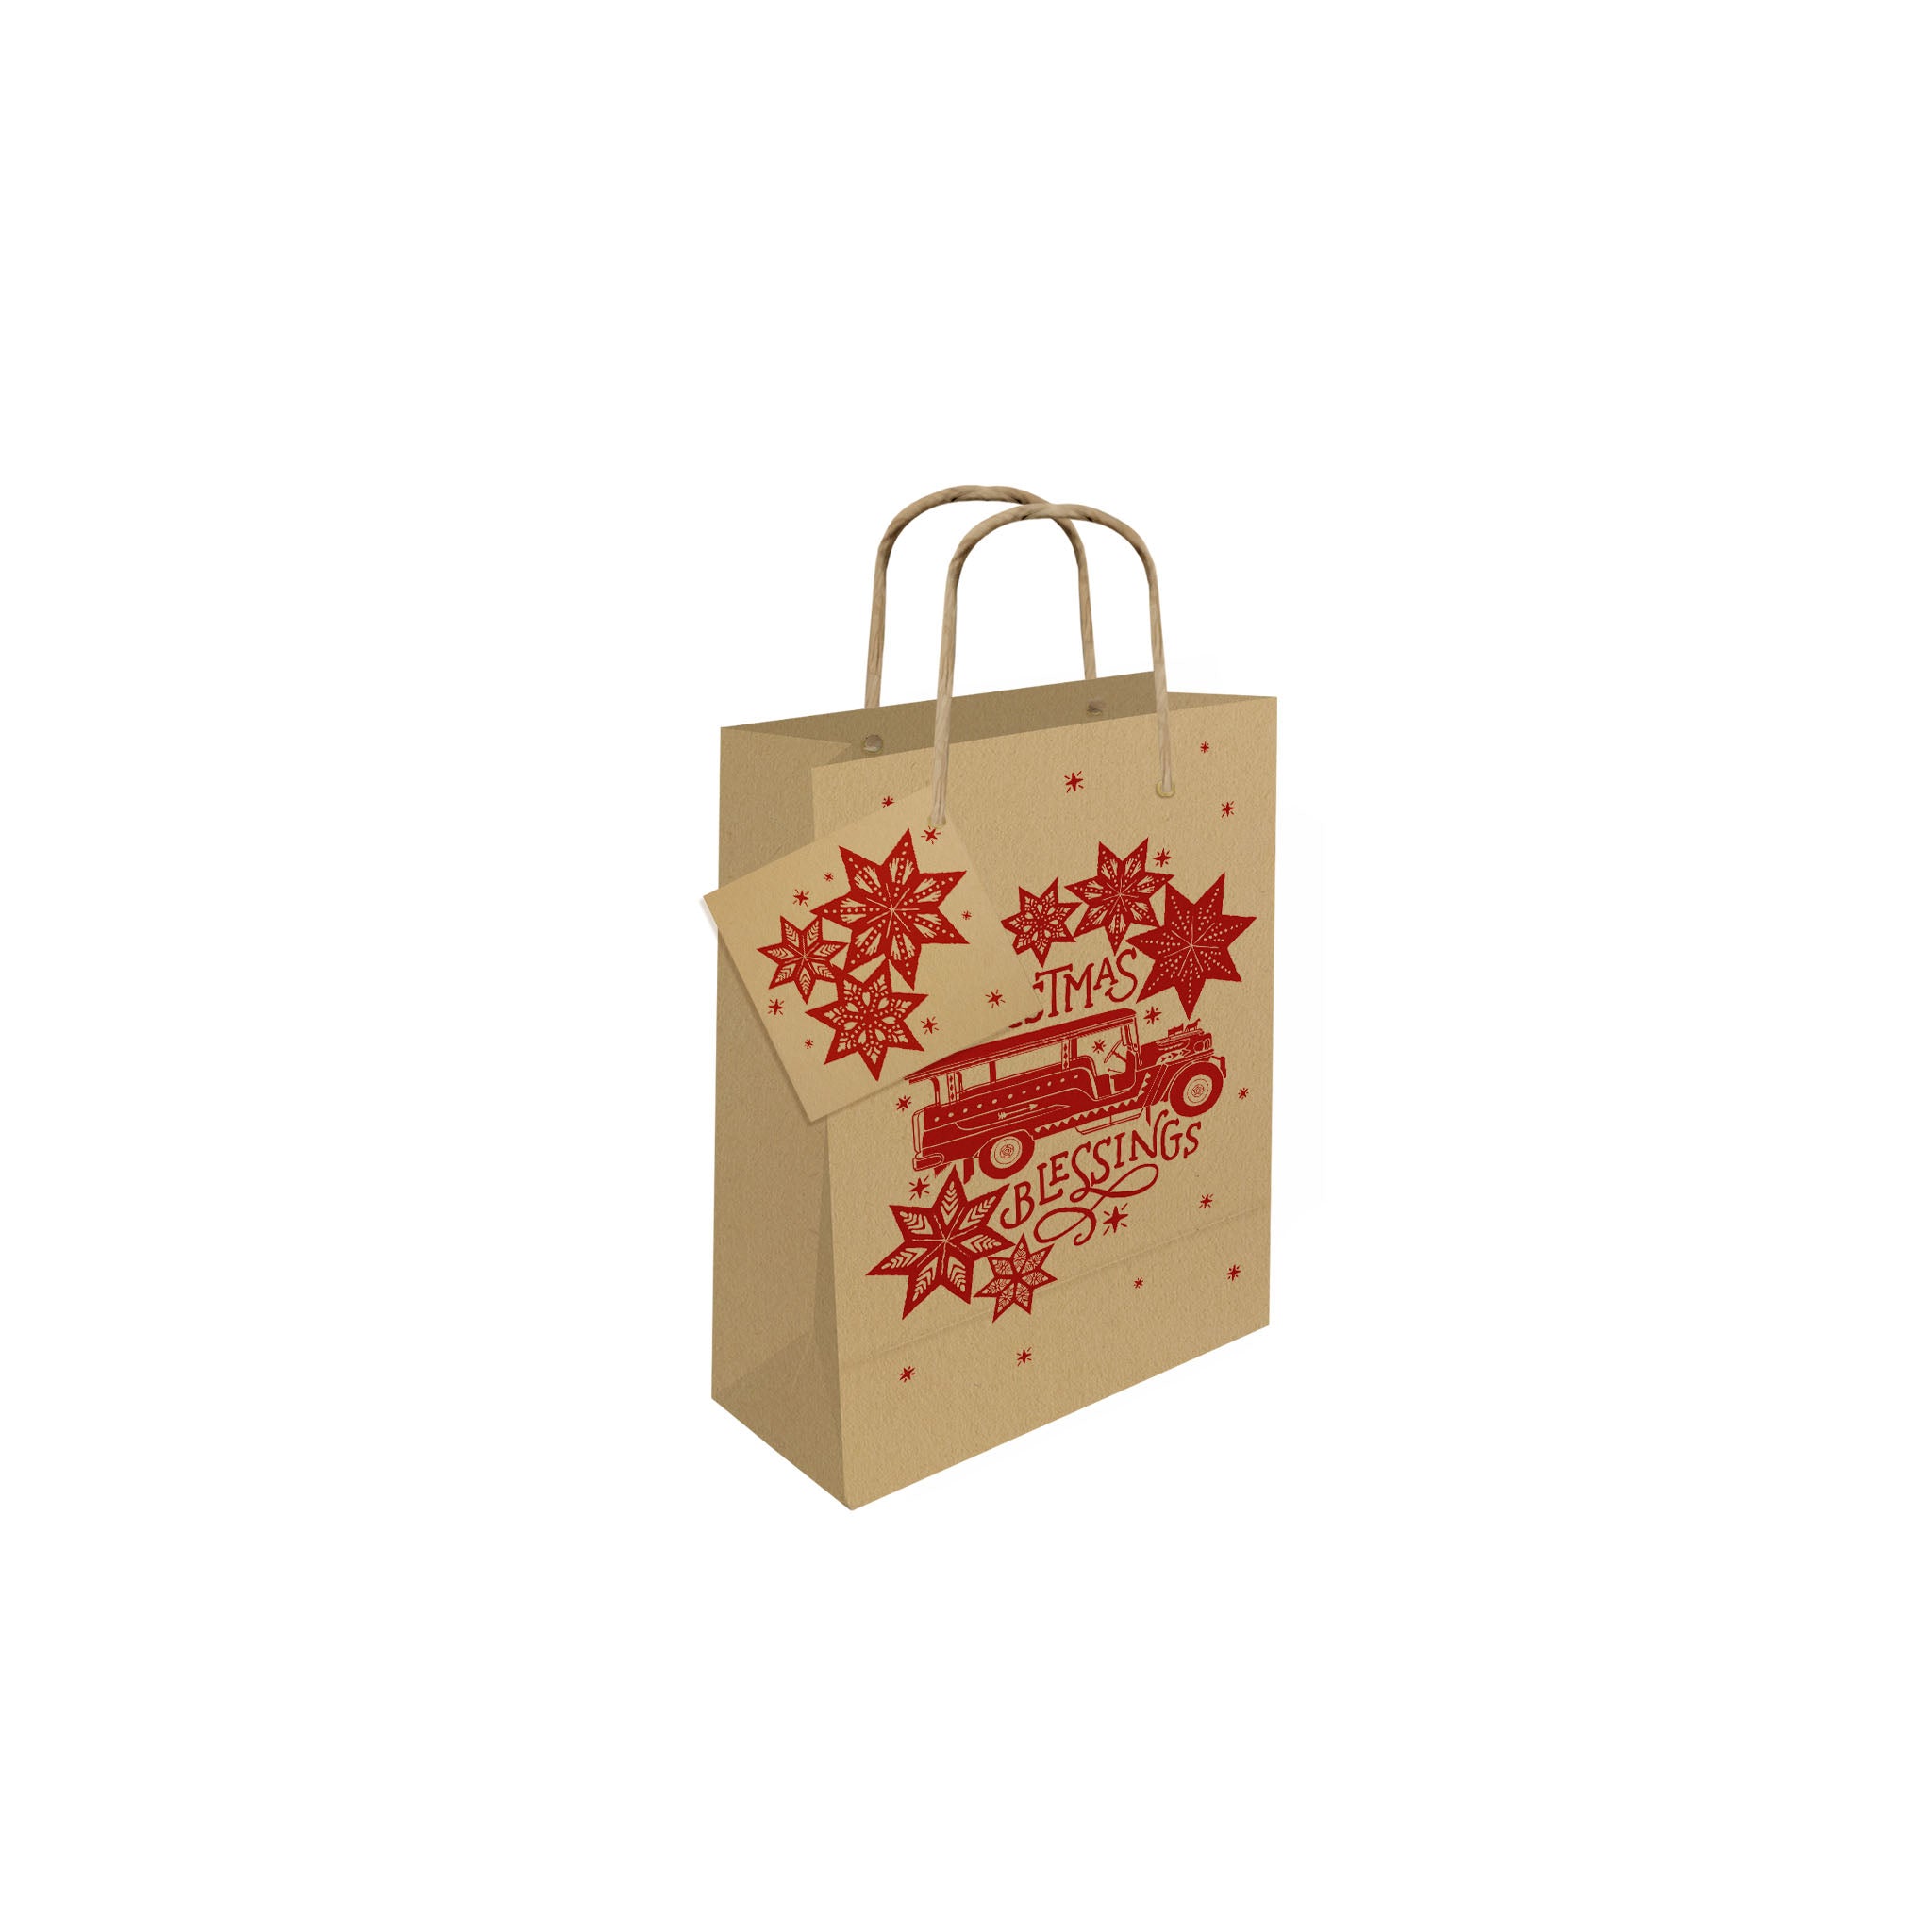 DIY Paper Christmas Gift Bag || How to make Paper Bag || Christmas Gift Bag  ideas @joenalynstv5801 - YouTube